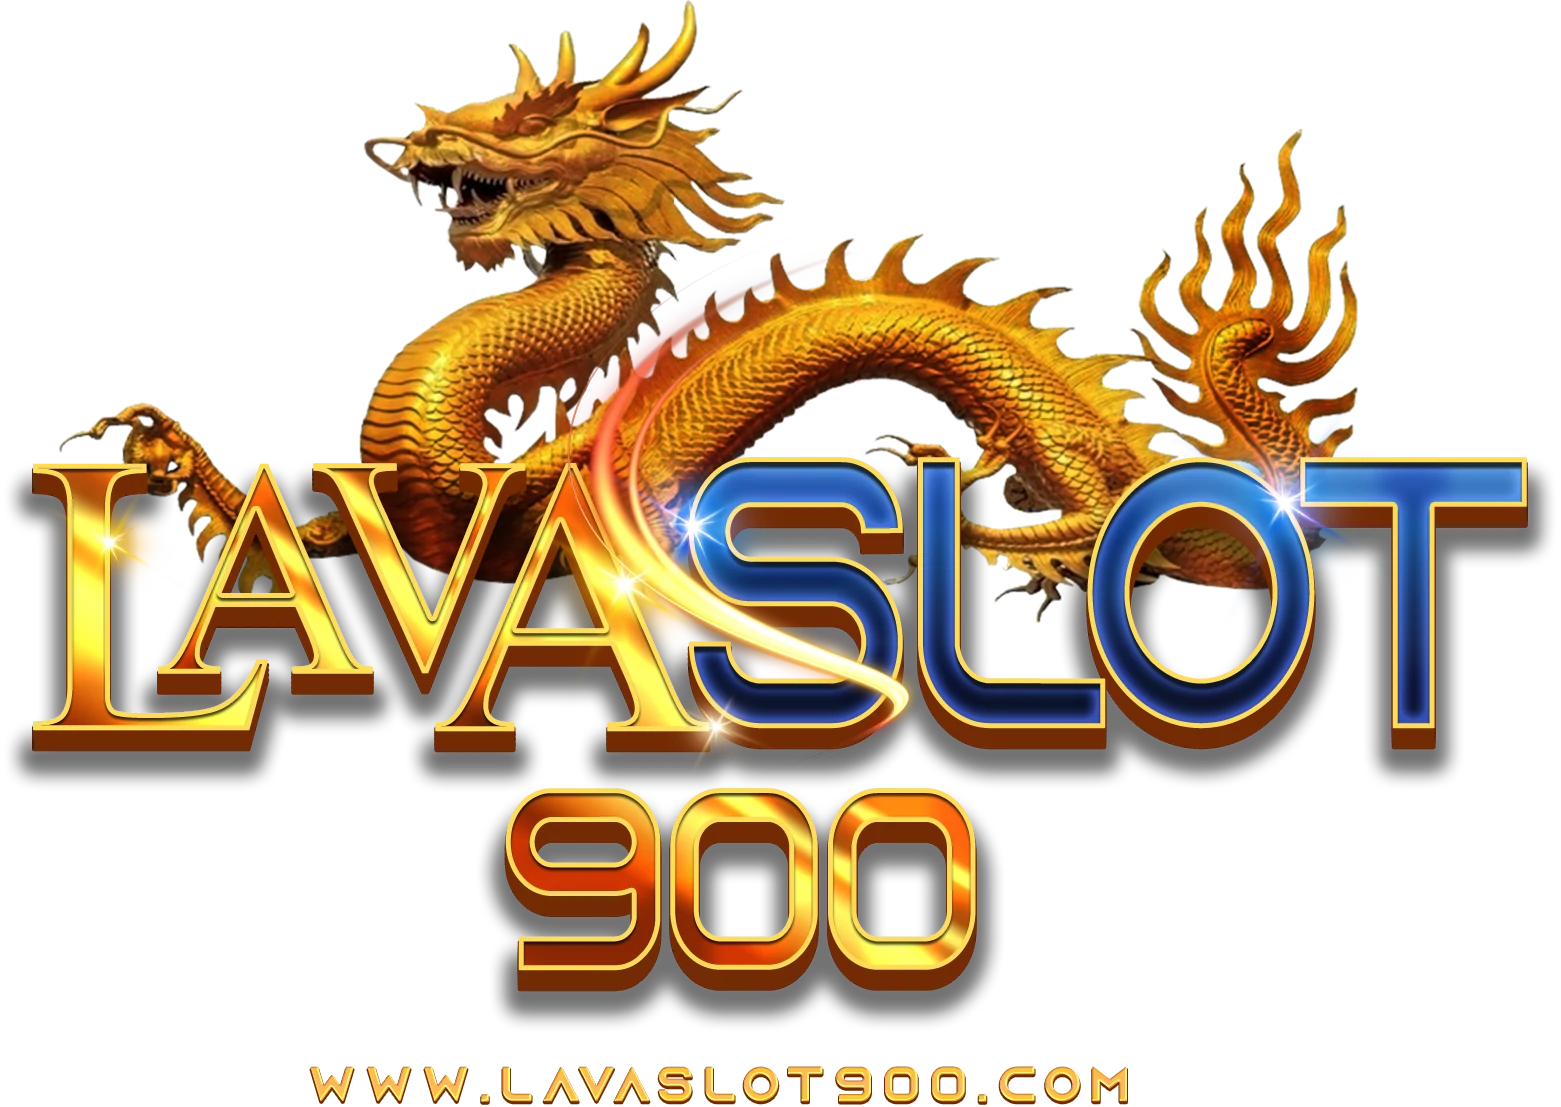 lavaslot900